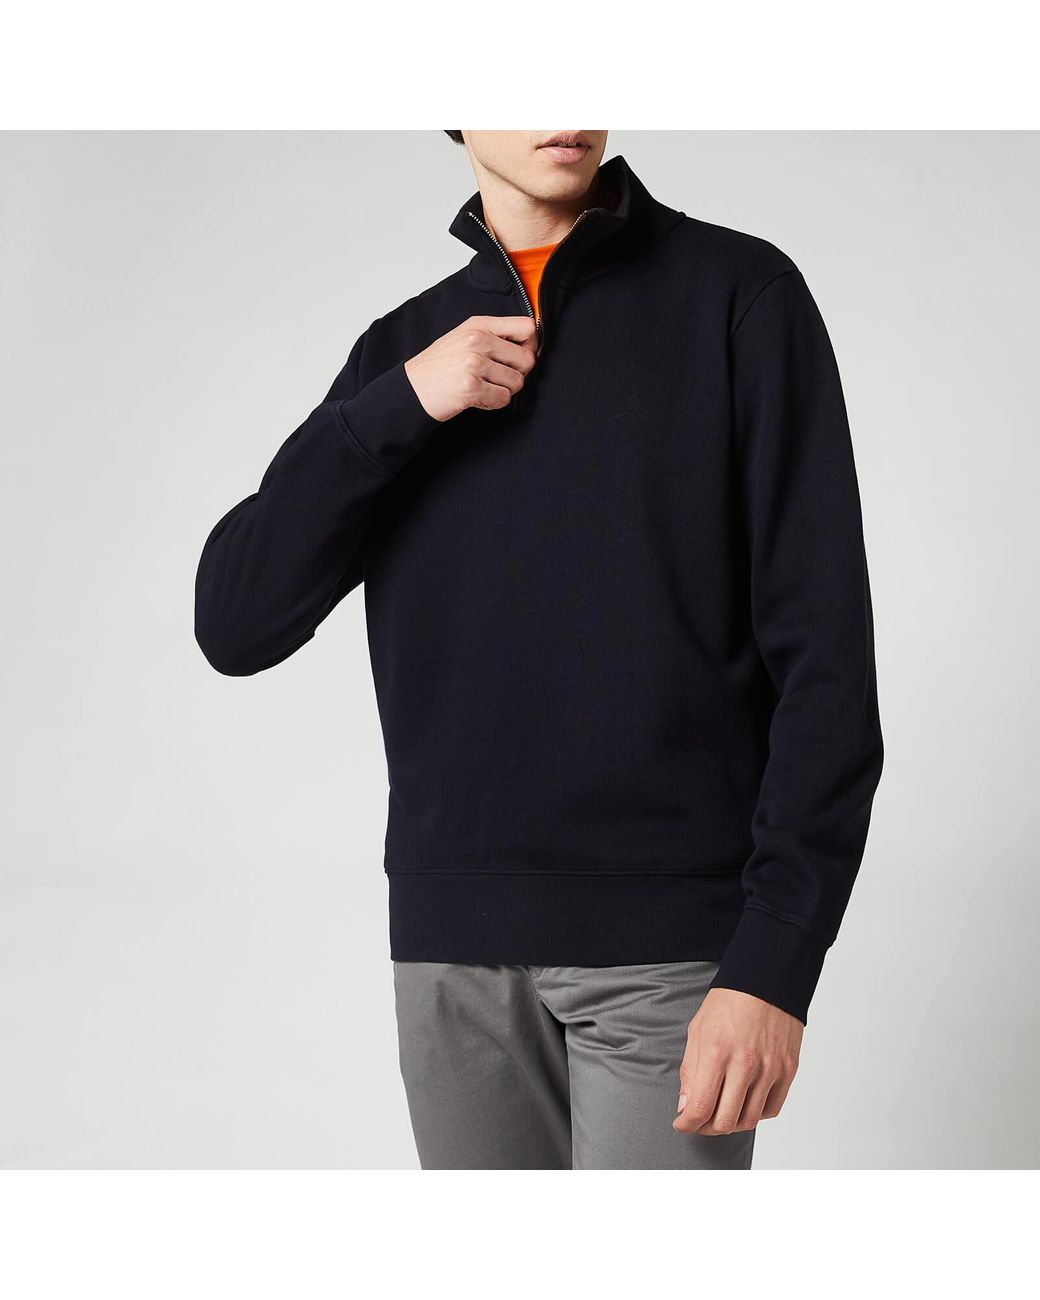 GANT Cotton Sacker Rib Half-zip Sweatshirt in Blue for Men - Lyst